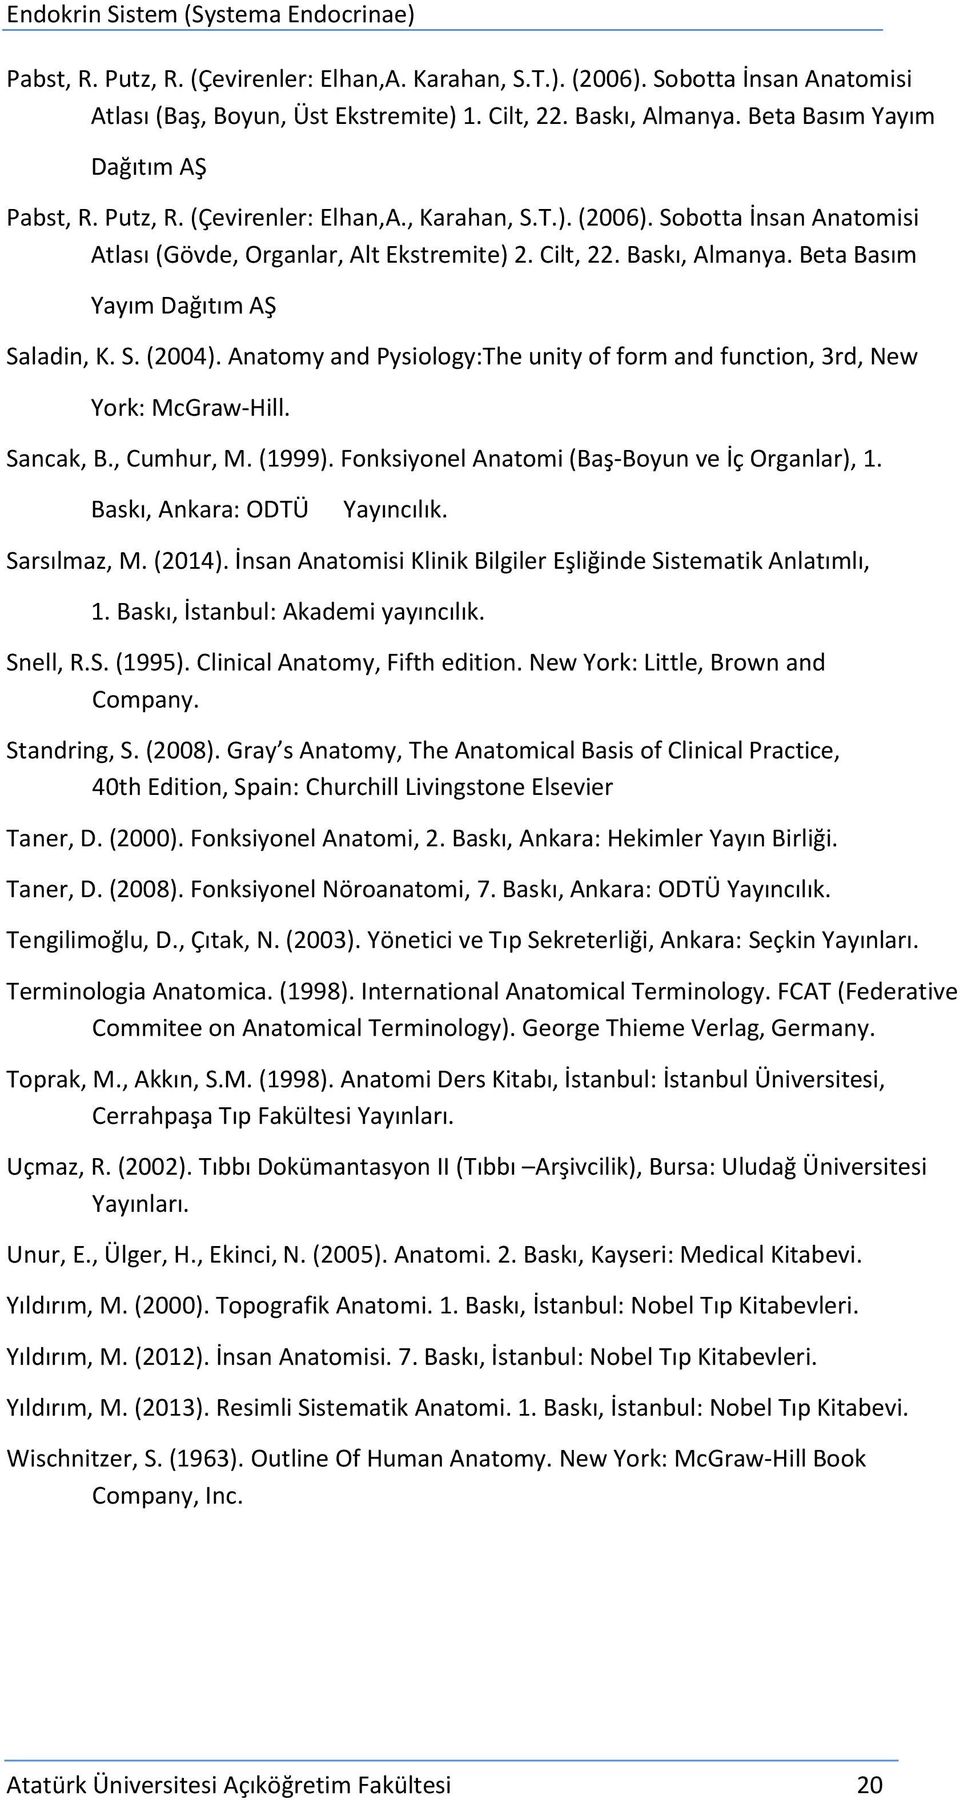 Anatomy and Pysiology:The unity of form and function, 3rd, New York: McGraw-Hill. Sancak, B., Cumhur, M. (1999). Fonksiyonel Anatomi (Baş-Boyun ve İç Organlar), 1. Baskı, Ankara: ODTÜ Yayıncılık.